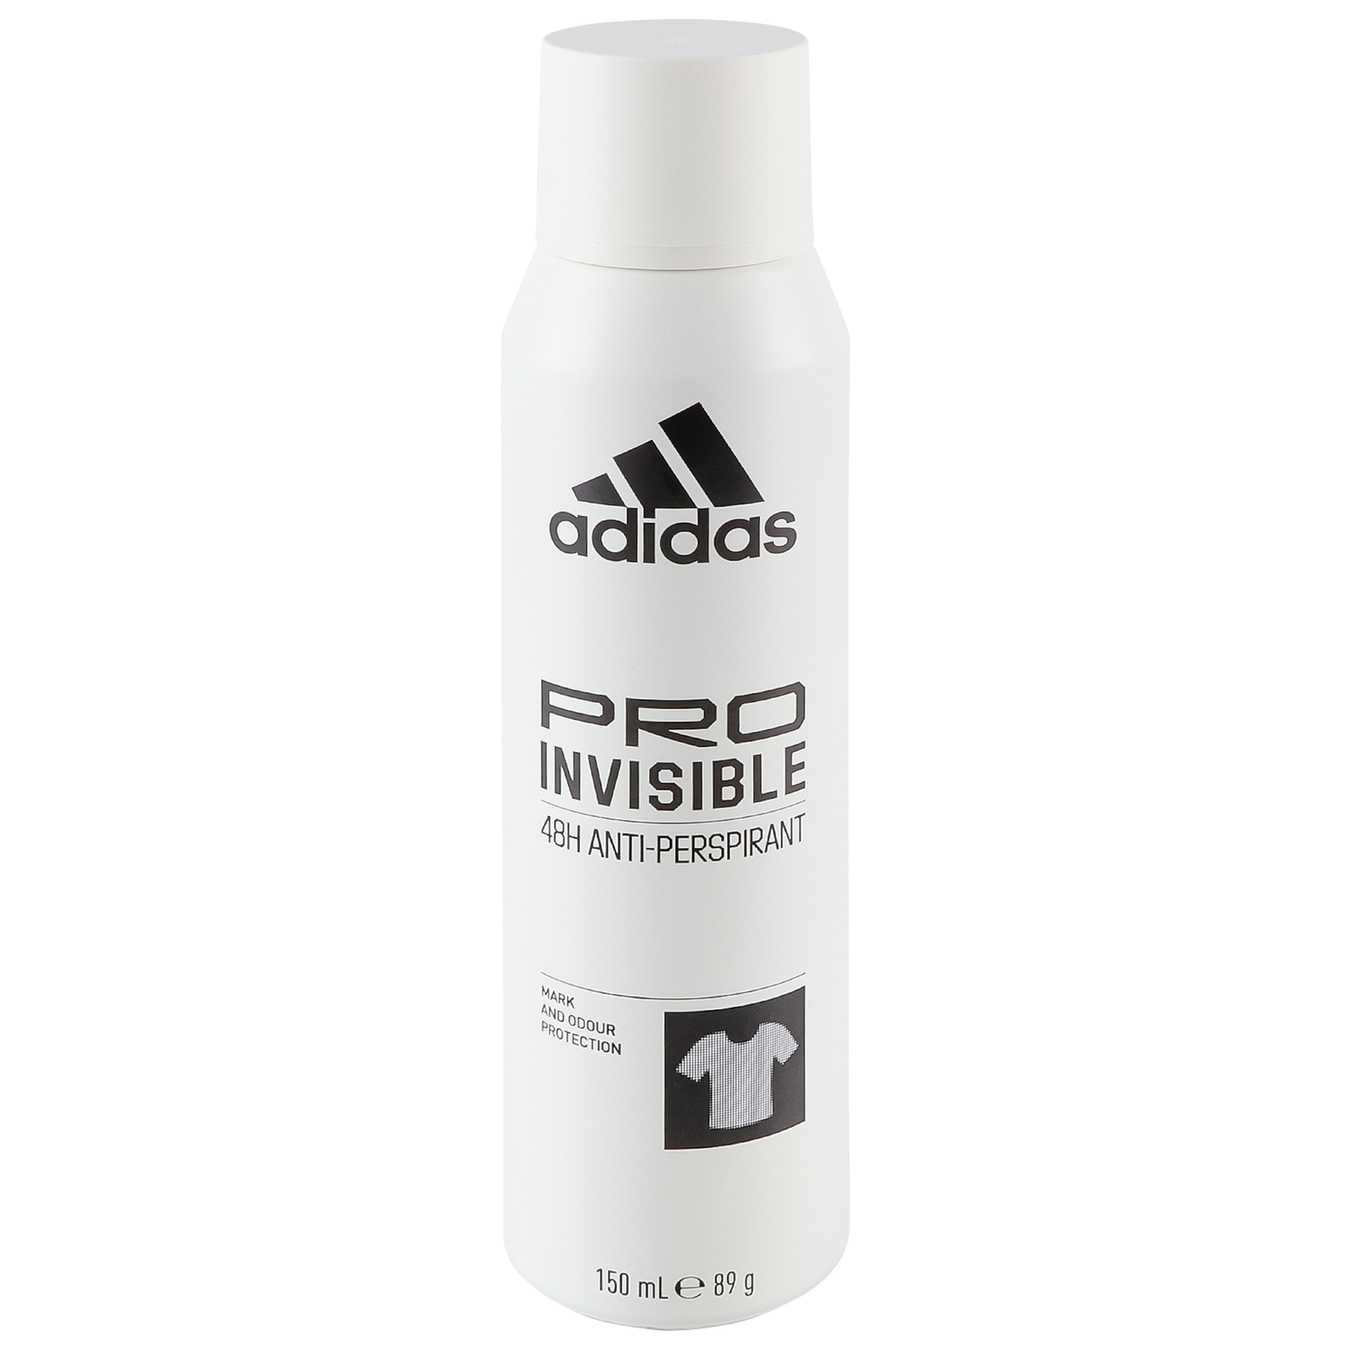 Deodorant spray Adidas Invisible pro for women 150ml 2